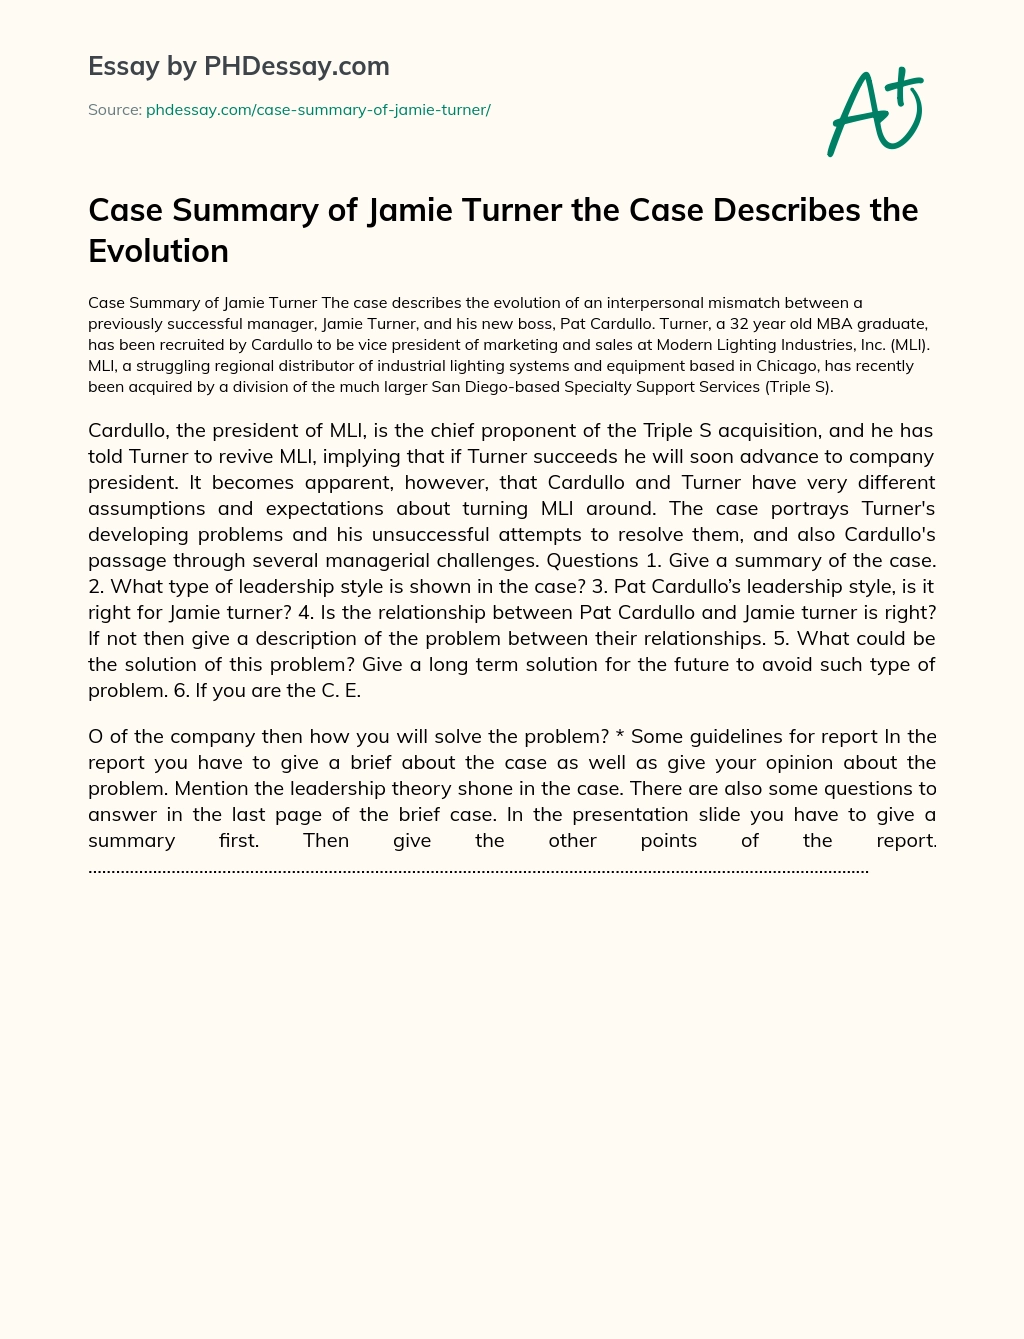 Case Summary of Jamie Turner the Case Describes the Evolution essay